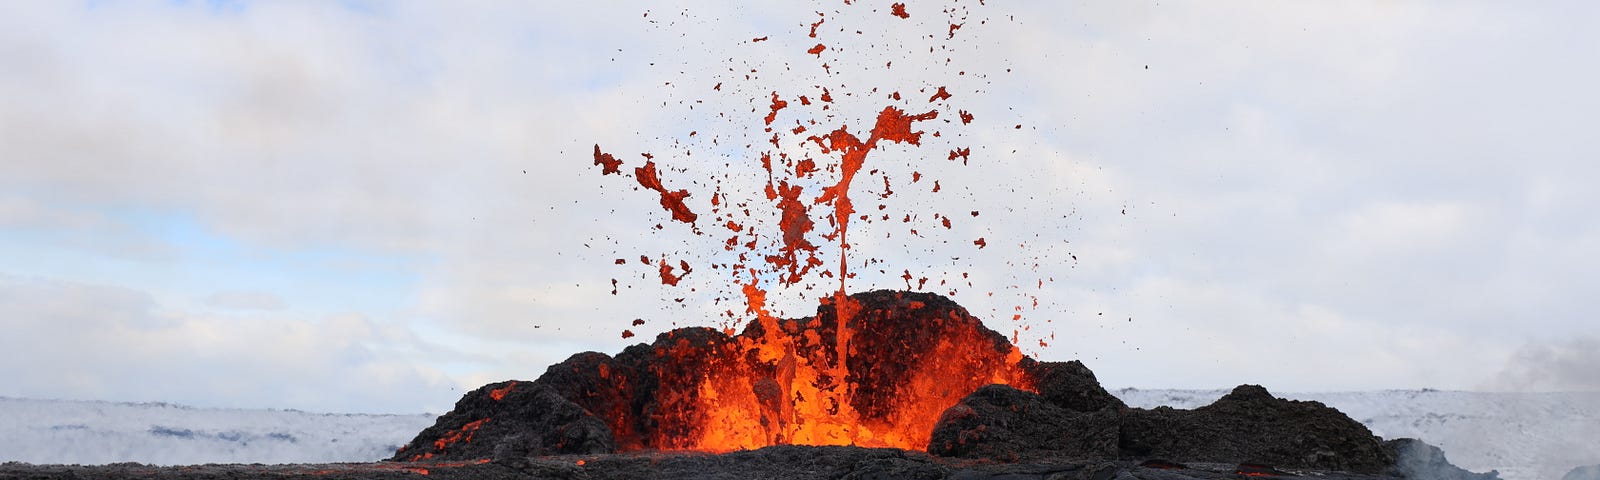 Lava splurts out of a volcano